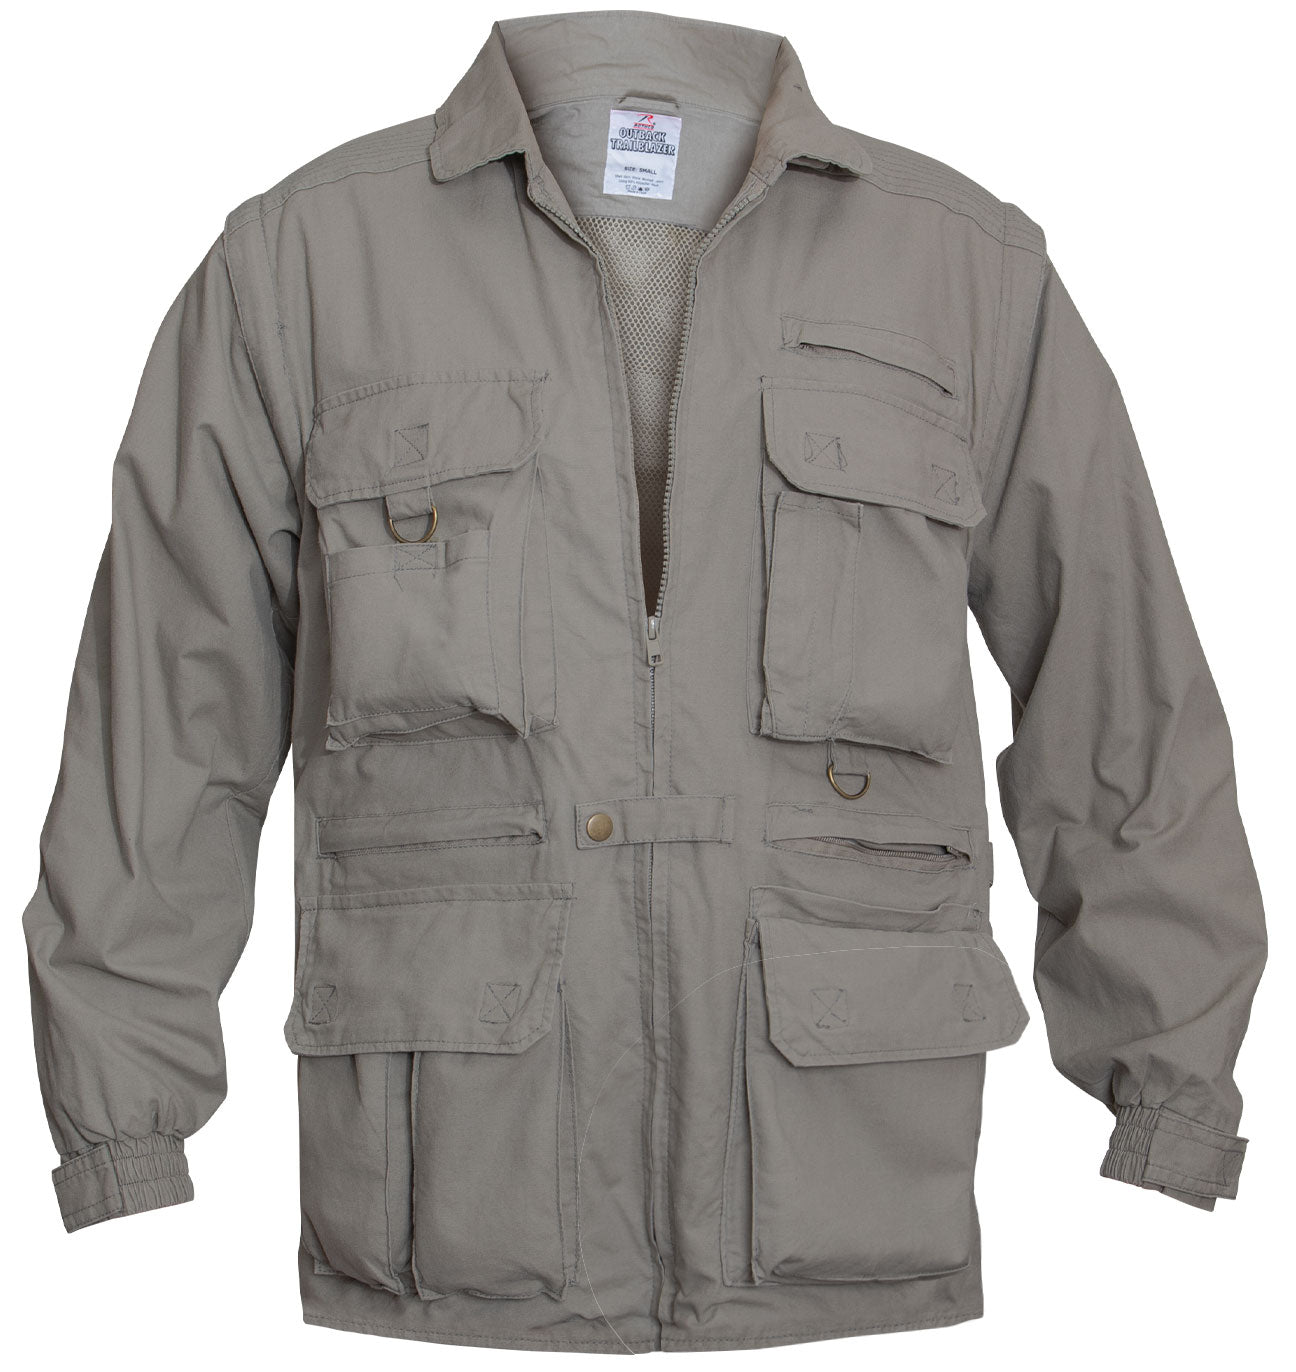 Rothco 7590 Convertible Safari Jacket with Zip-Off Sleeves (Khaki) - Clothing & Accessories